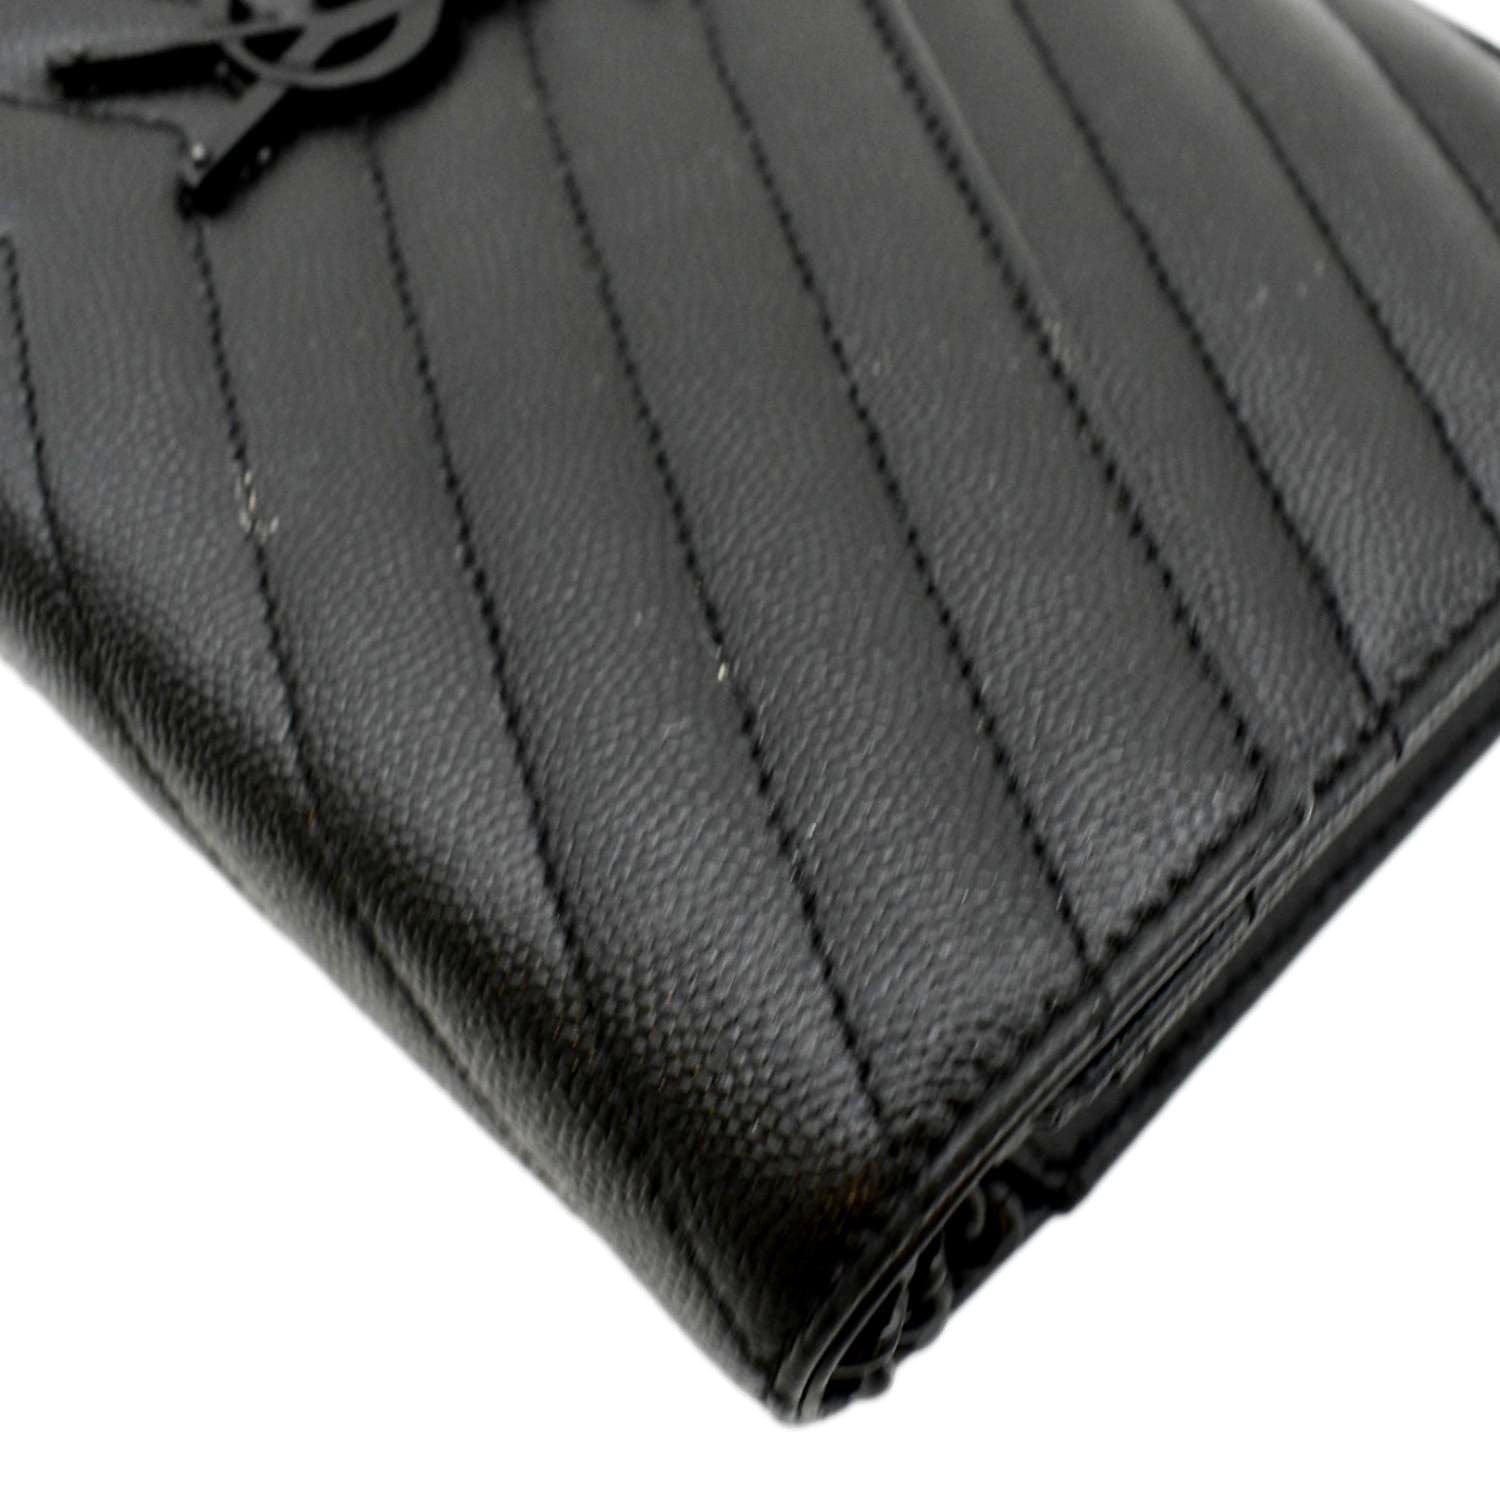 Saint Laurent Cassandre Quilted Textured-leather Wallet - Black - One Size